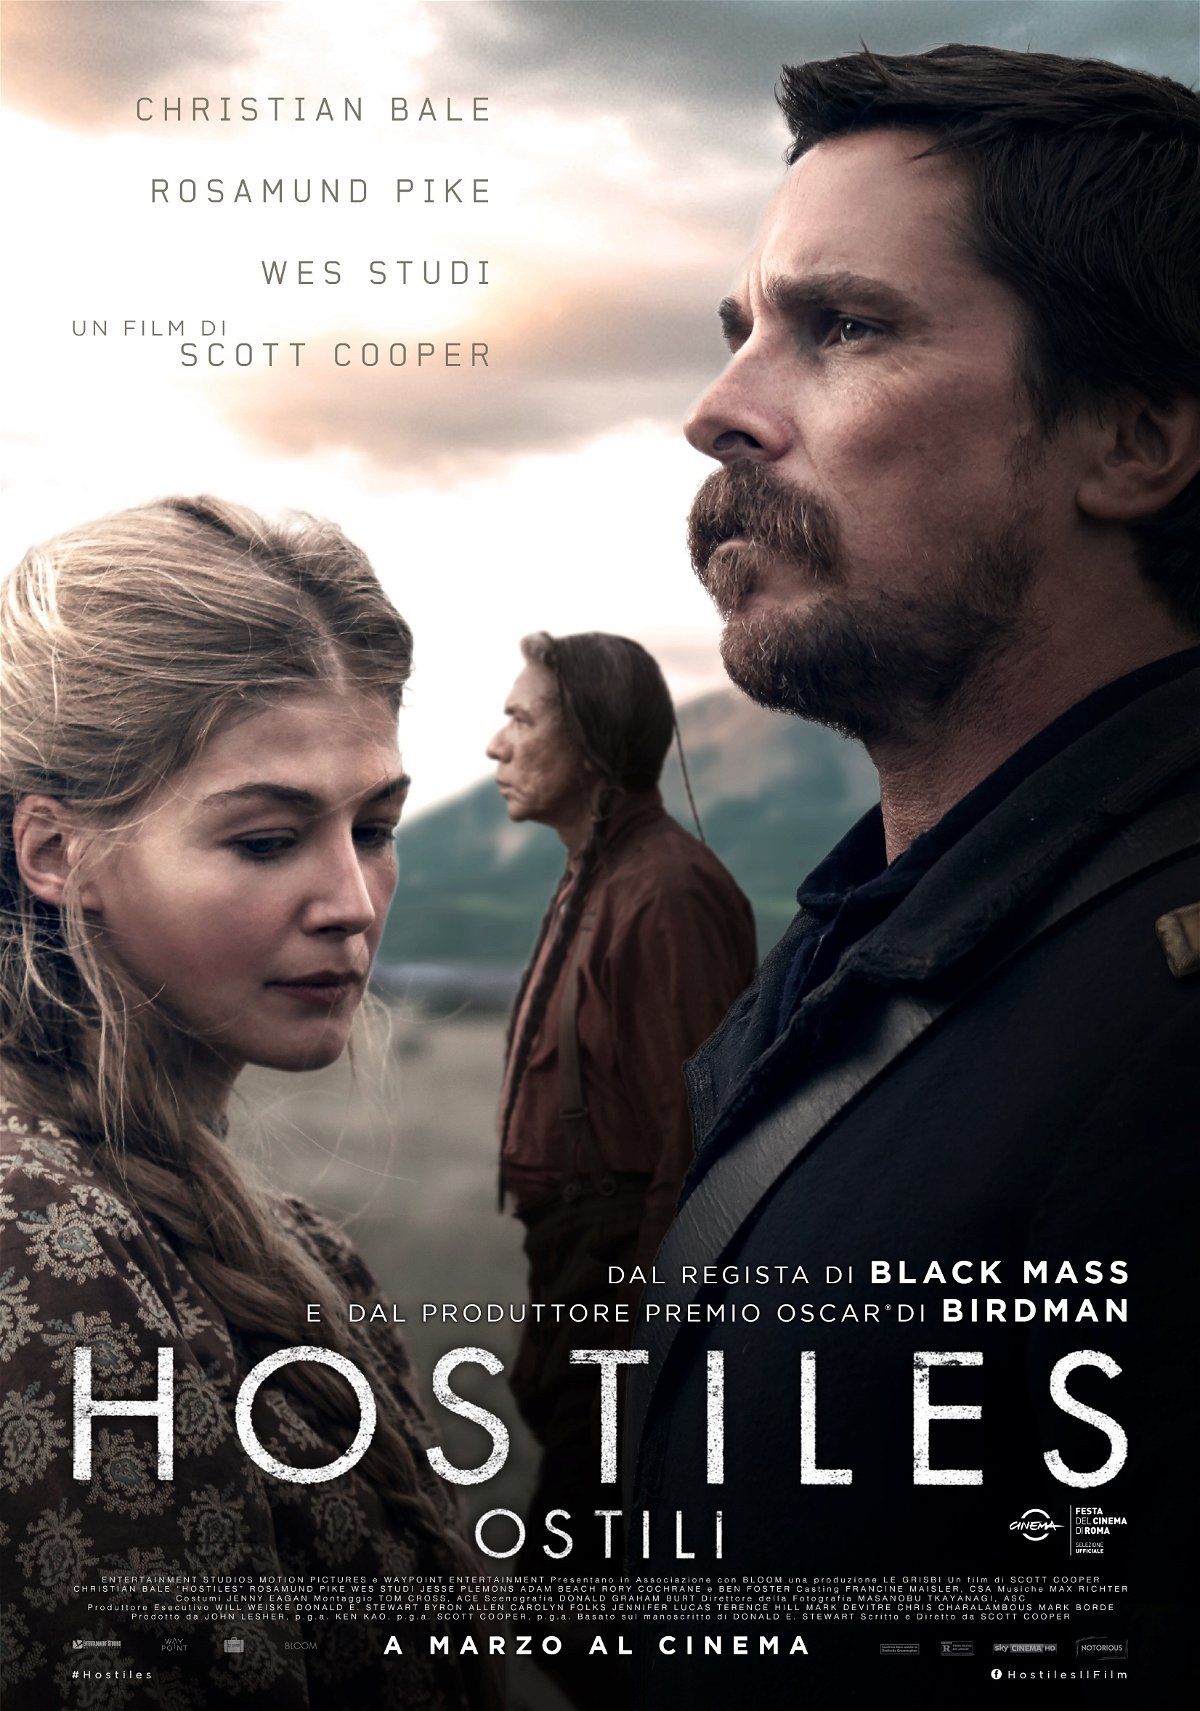 Christian Bale, Rosamund Pike e Wes Study nel manifesto italiano di Hostiles - Ostili